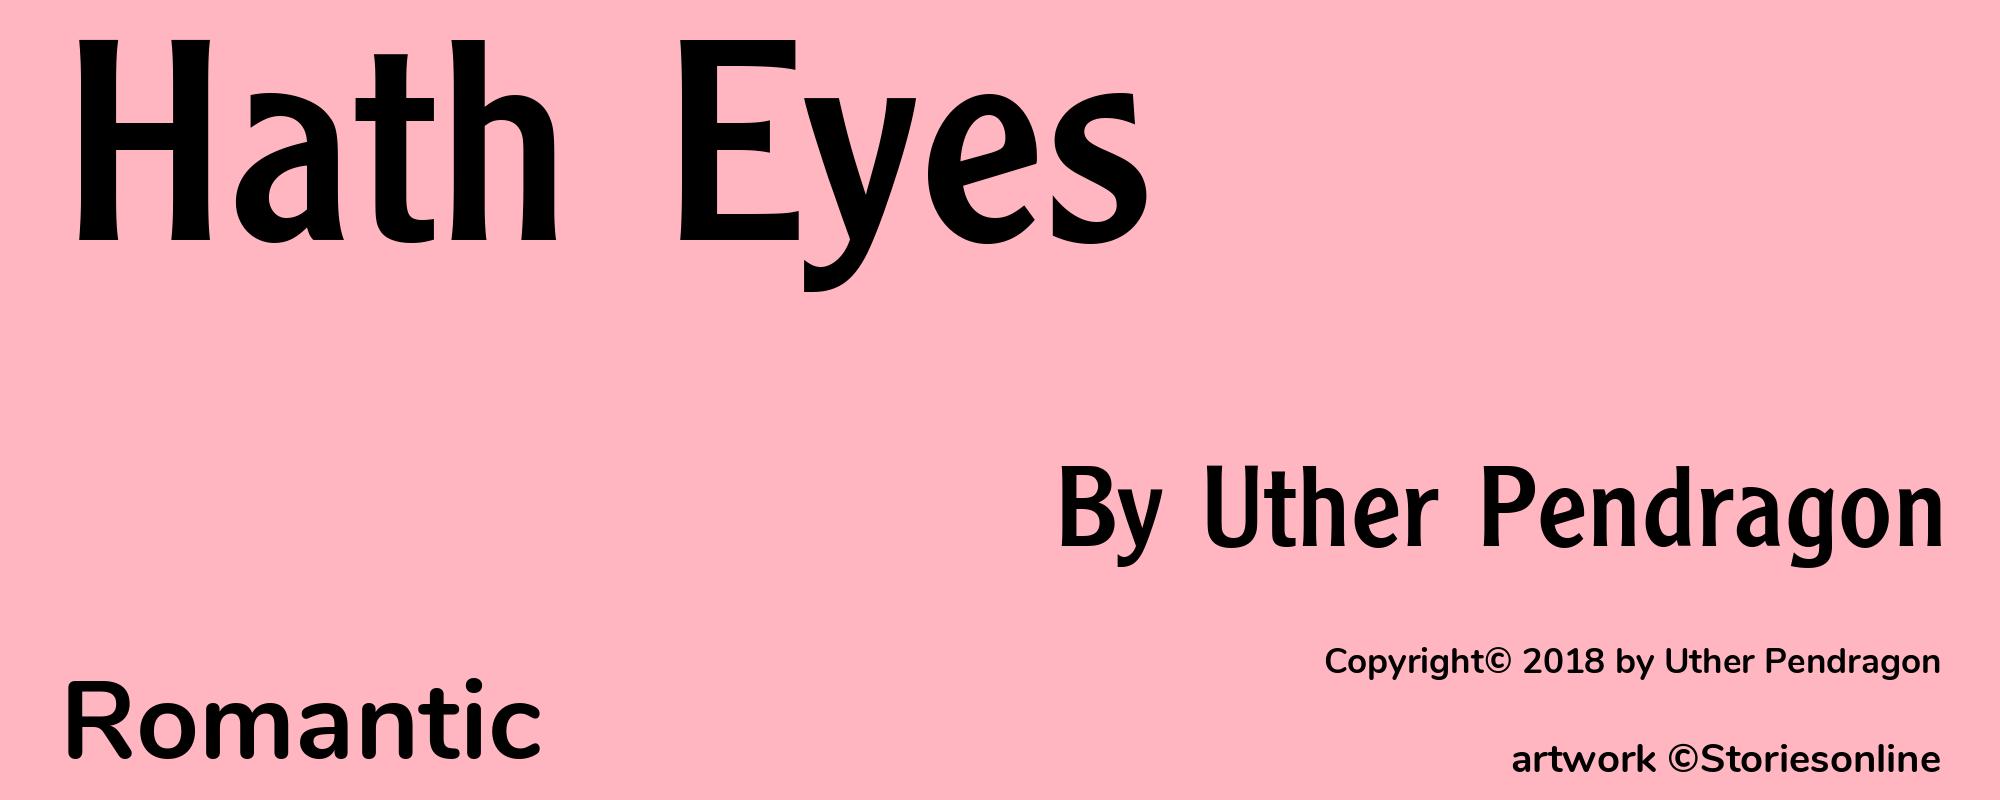 Hath Eyes - Cover